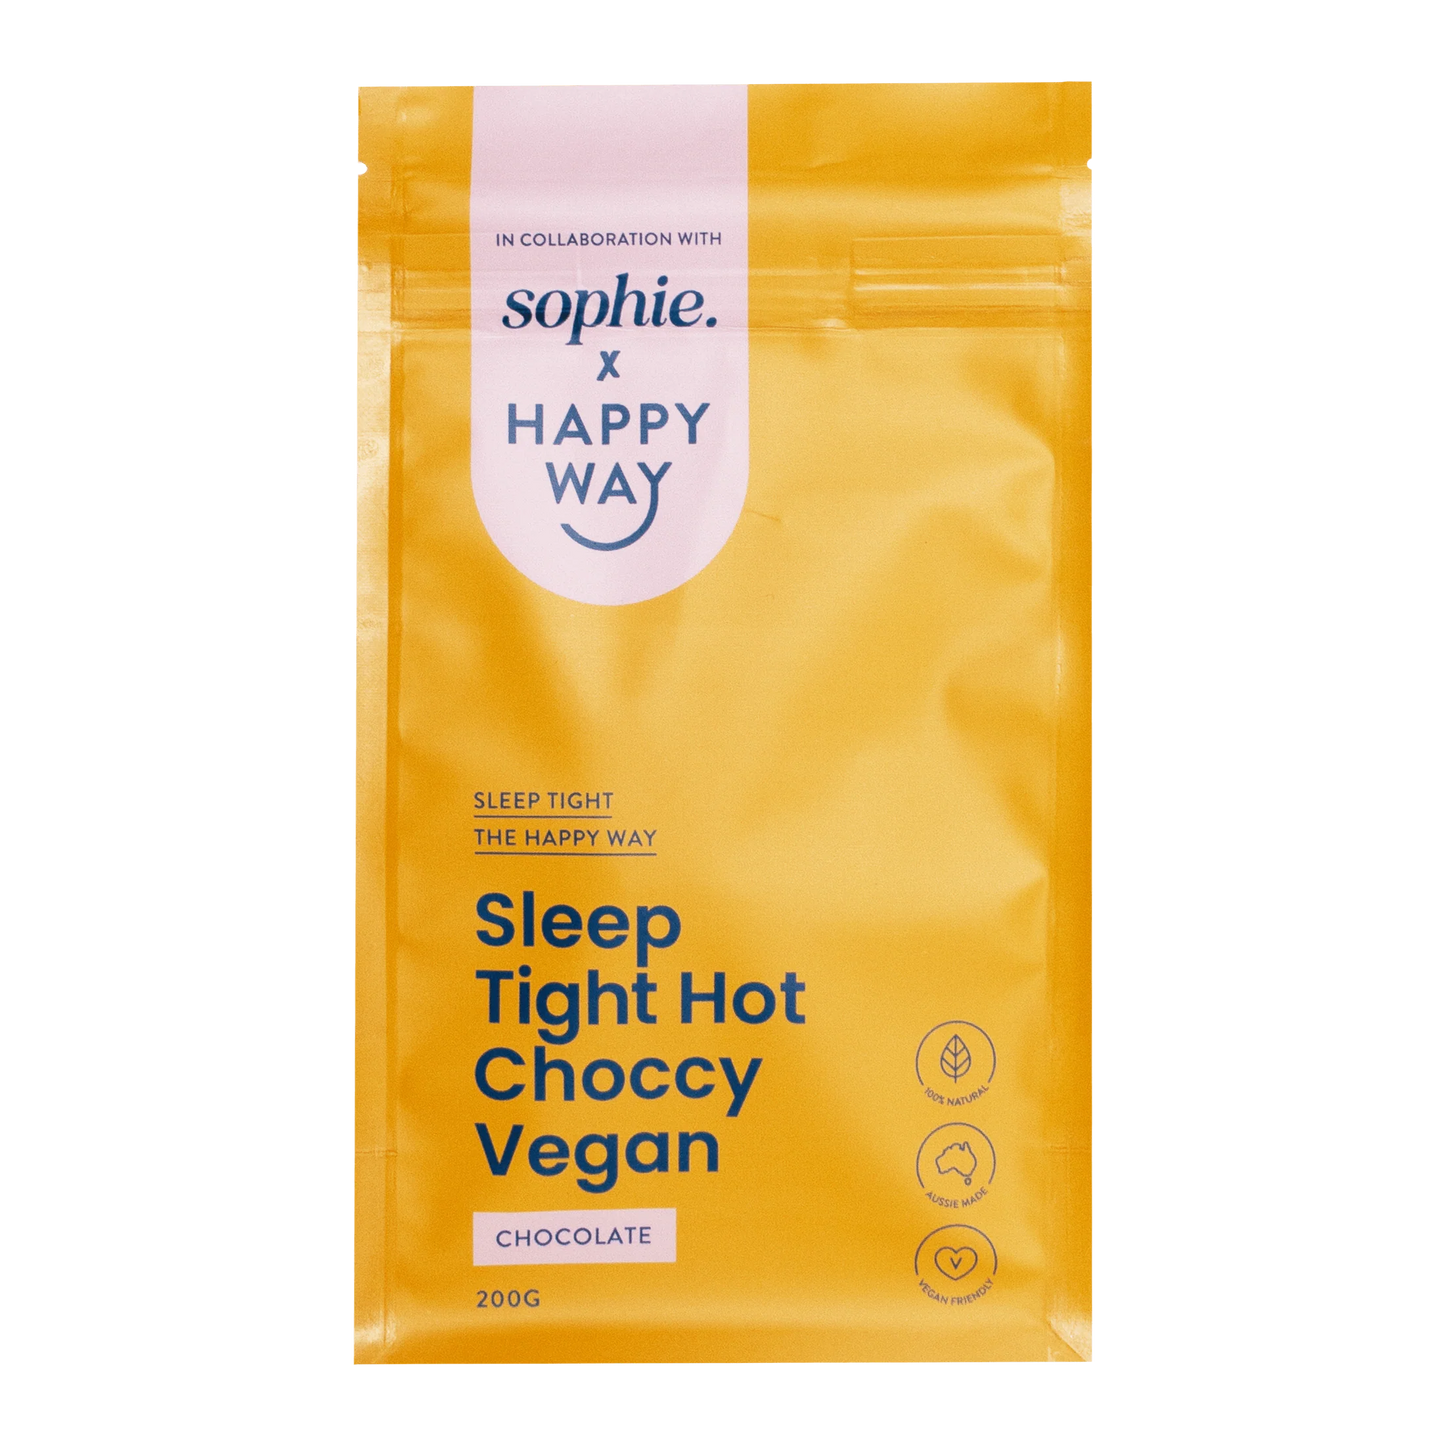 Happy Way Sophie's Sleep Tight Hot Choccy 200g, Vegan